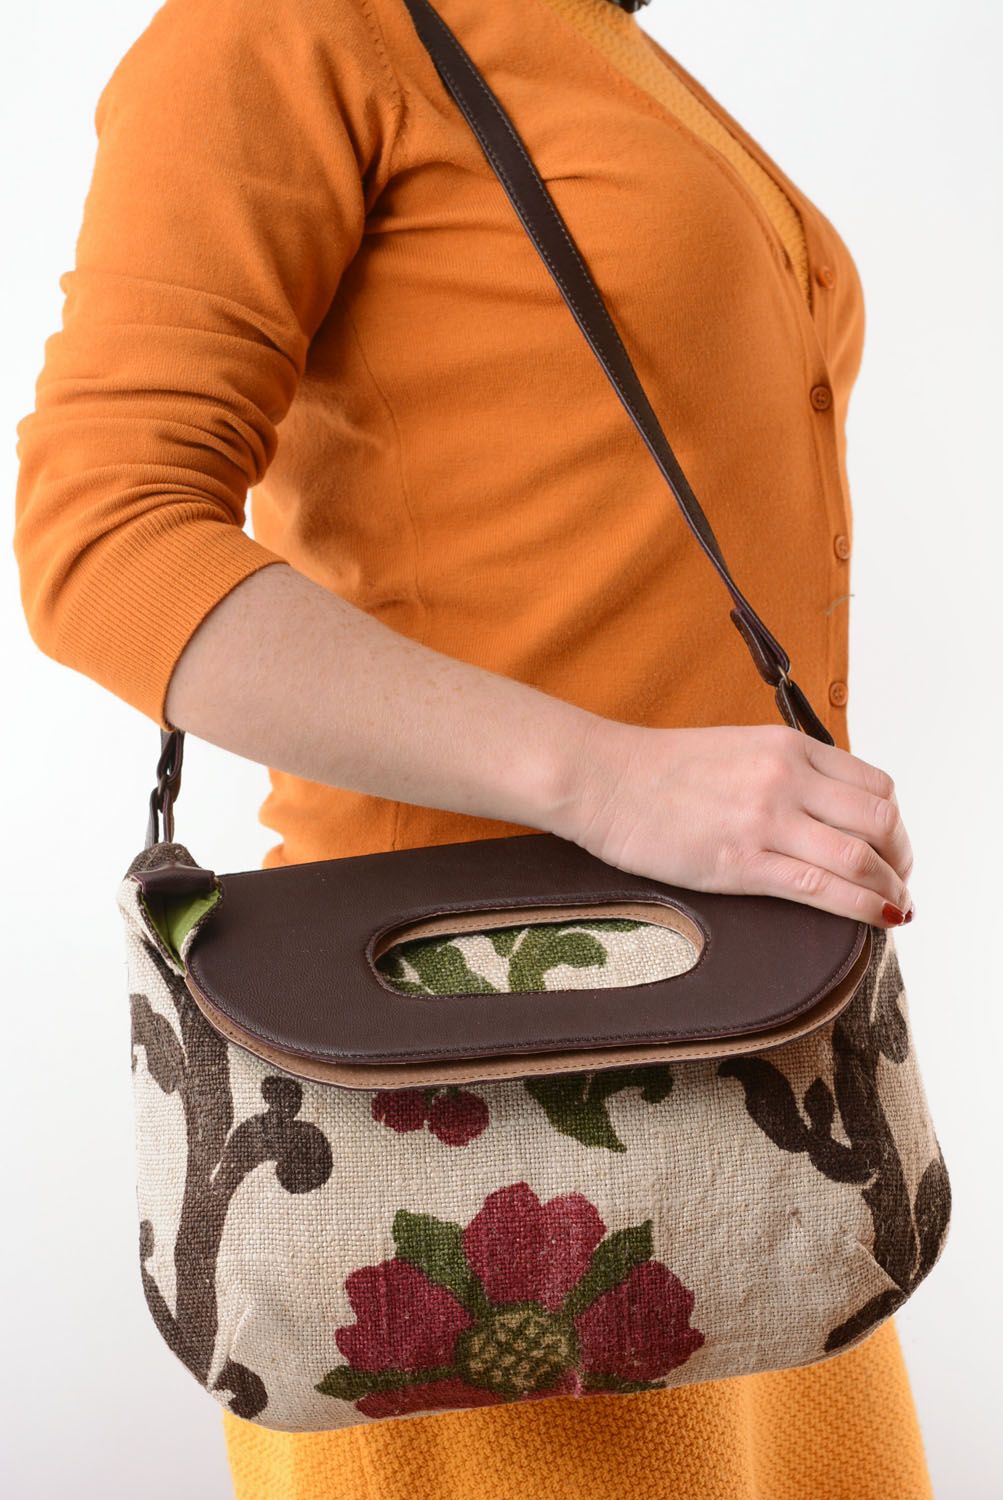 Homemade women's purse photo 1